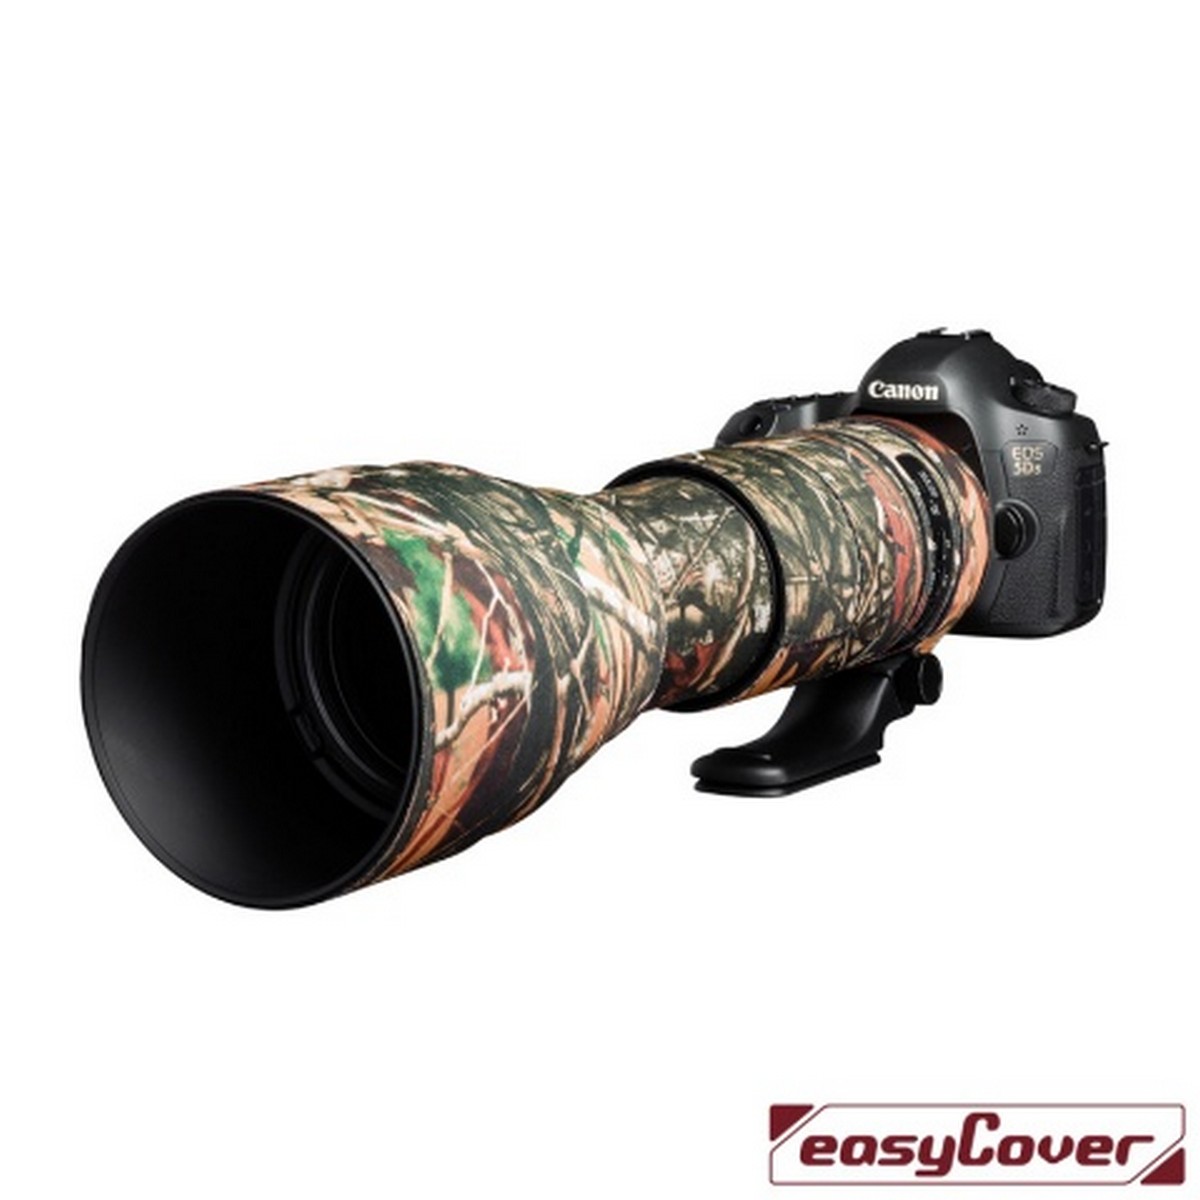 Easycover Lens Oak Objektivschutz für Tamron 150-600 mm 1:5-6,3 Di VC USD G2 Wald Camouflage